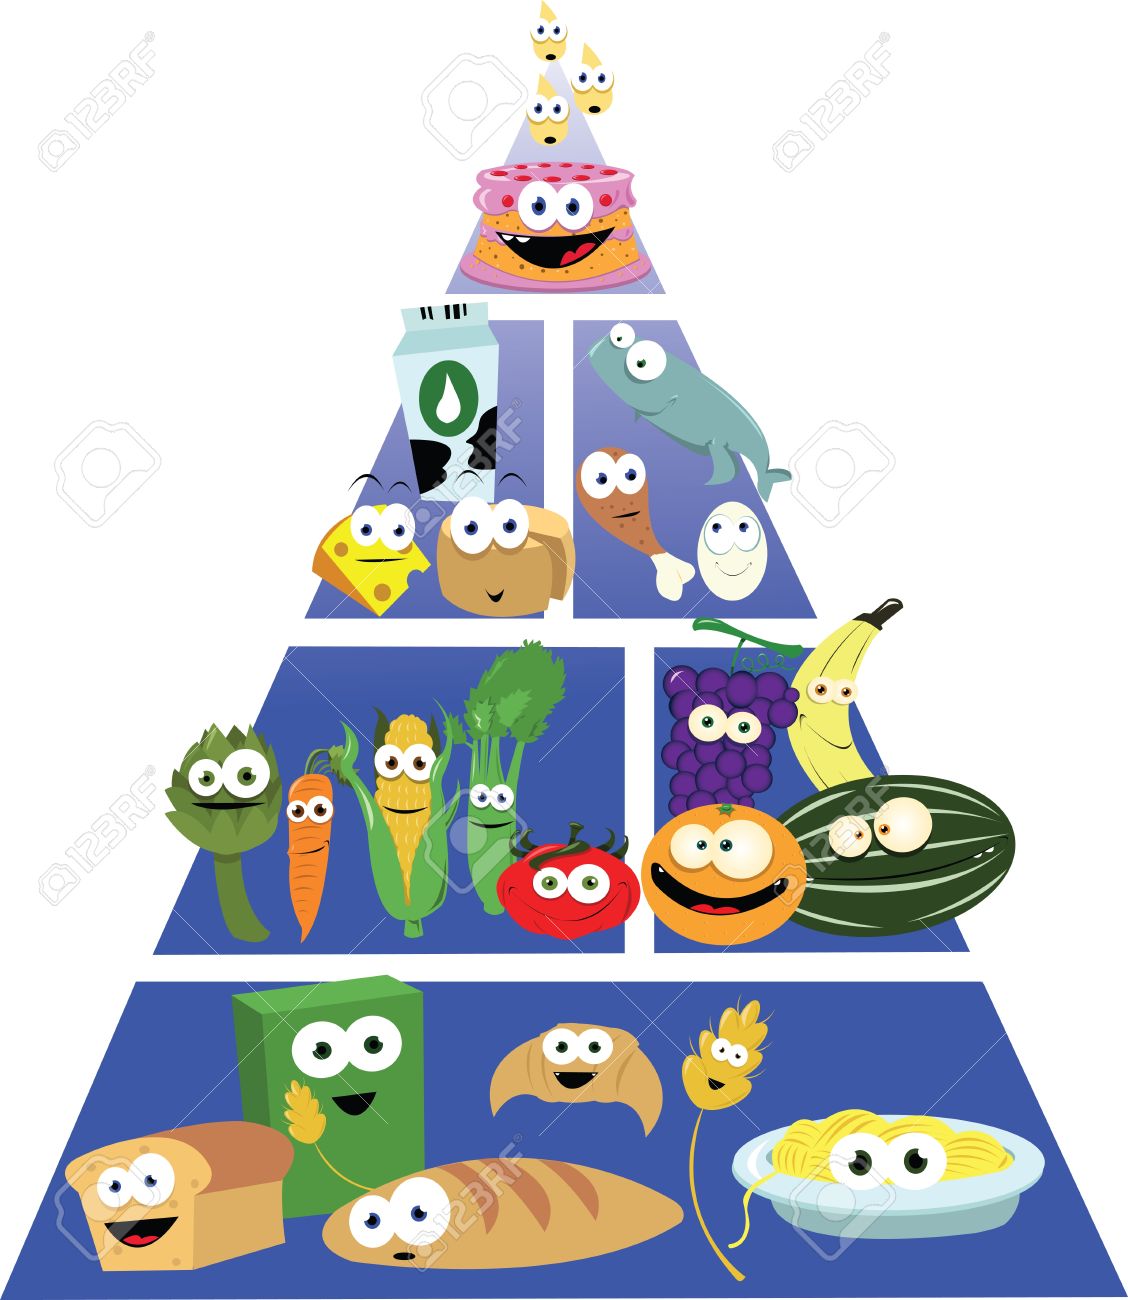 food pyramid: A cartoon representing a funny food pyramid Illustration